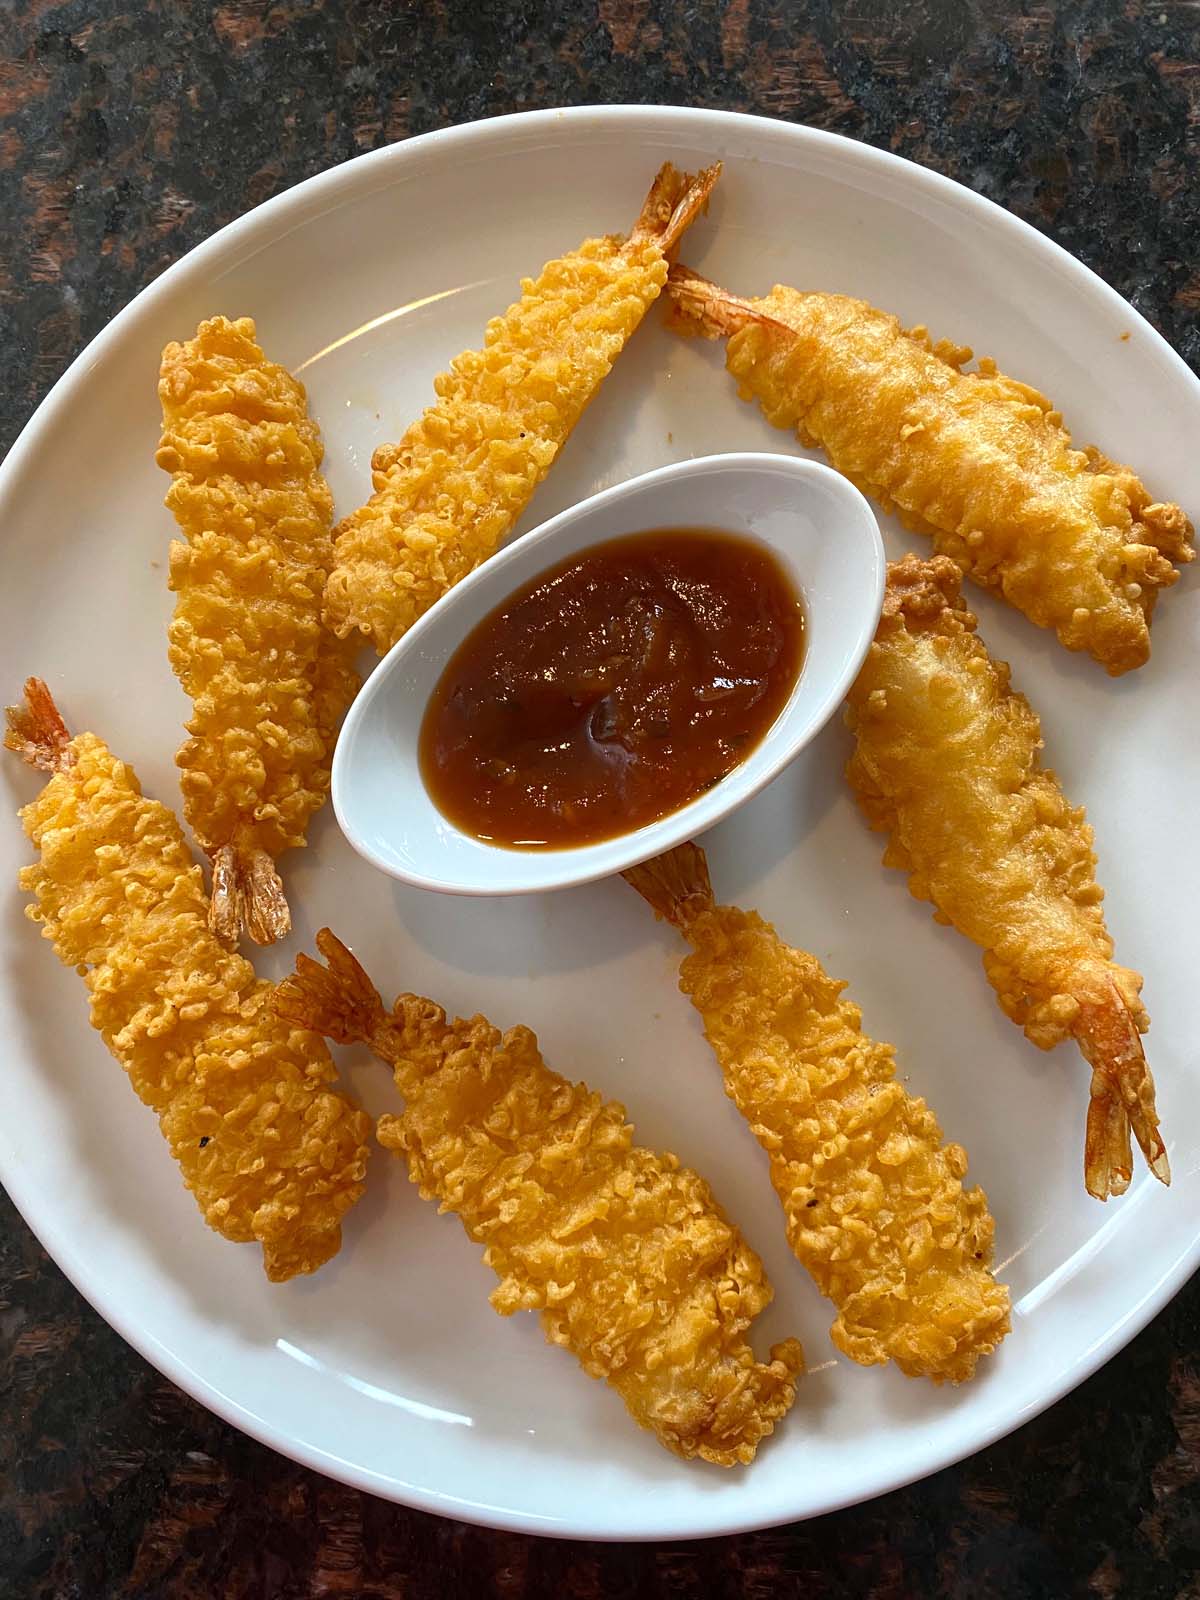 Plate of crispy tempura shrimp served with orange sauce.